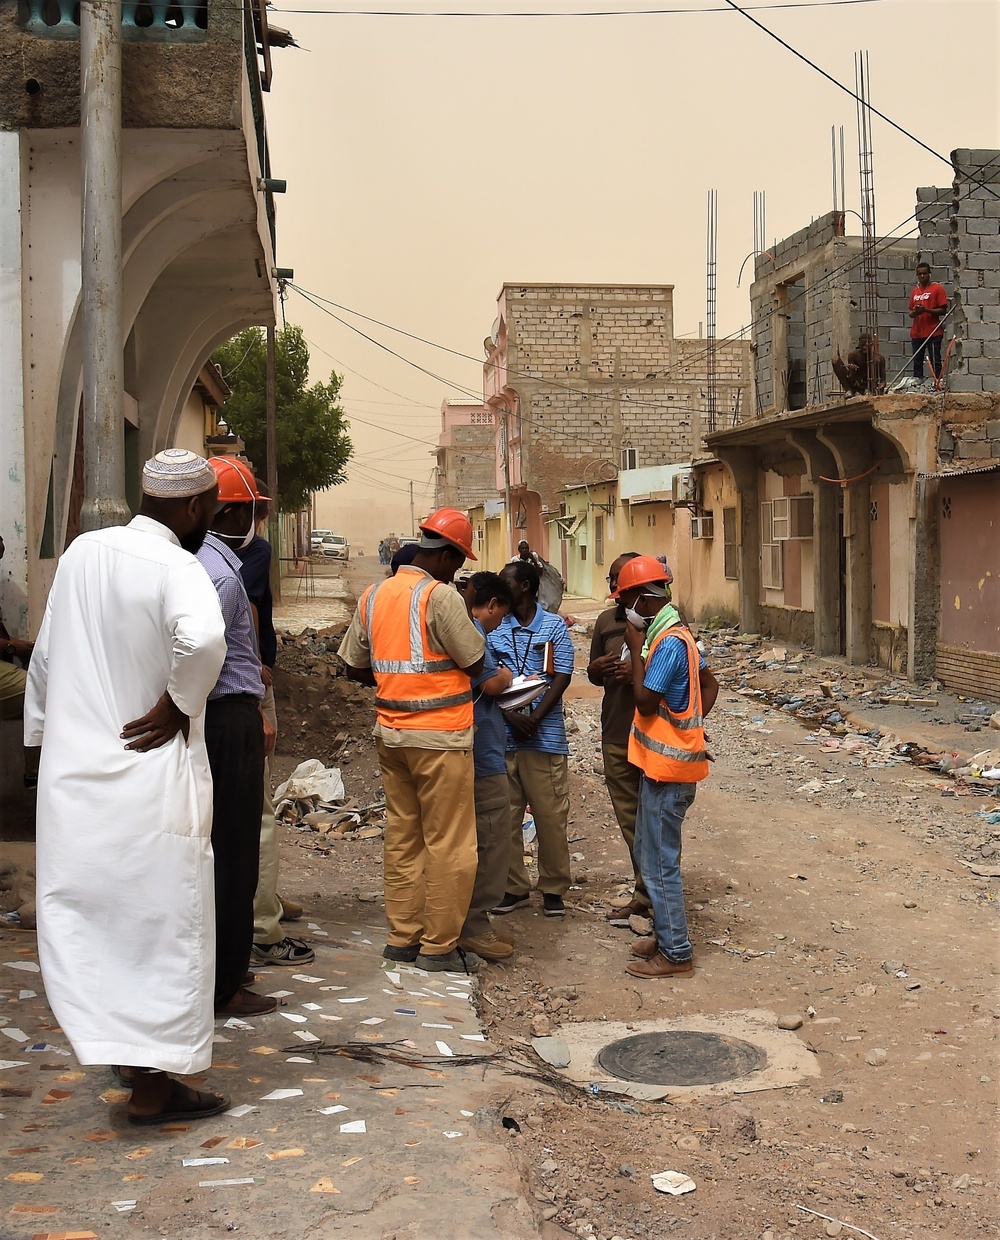 CJTF-HOA quality assurance renovates region with Djibouti First